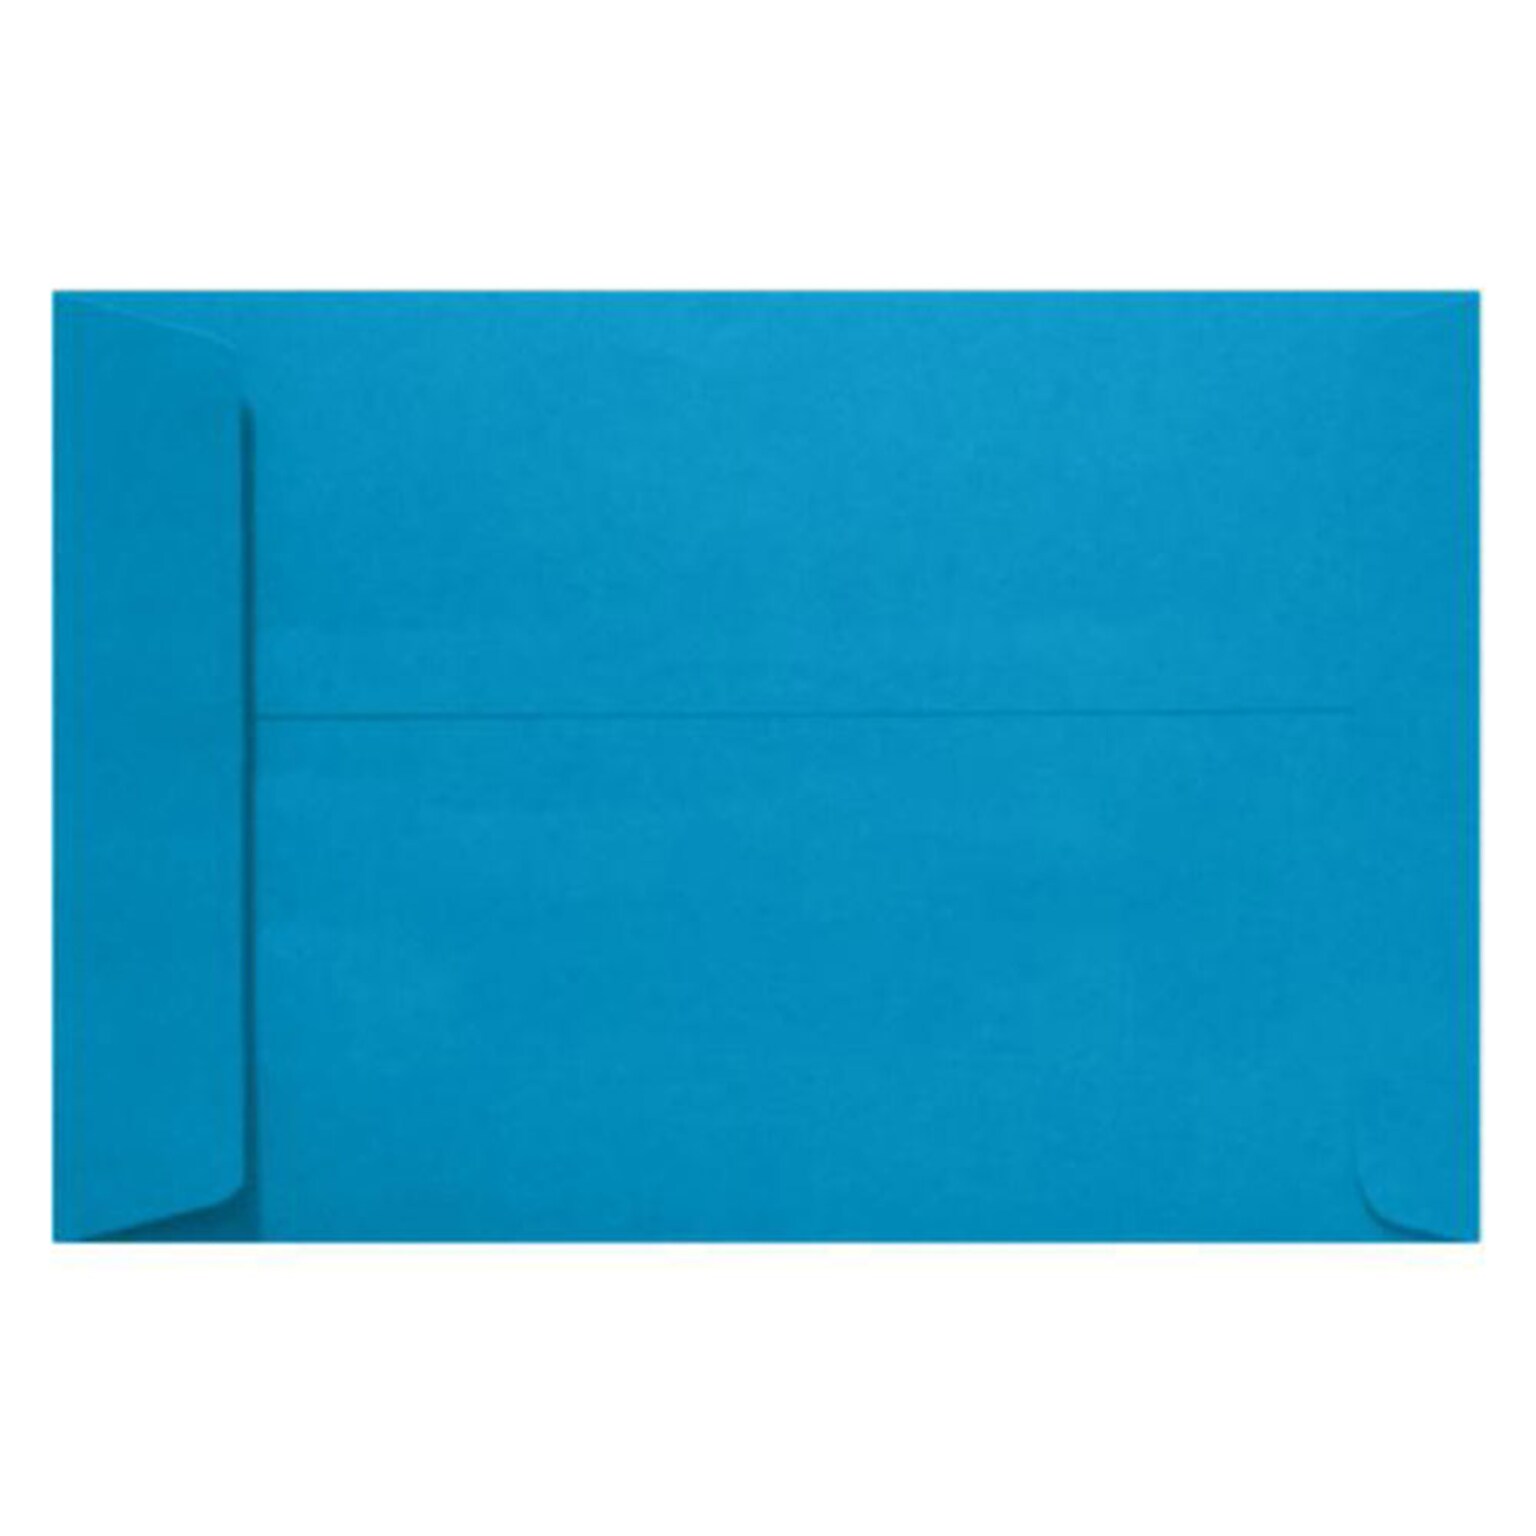 JAM Paper 10 x 13 Open End Envelopes, Pool Blue, 50/Pack (LUX-4897-102-50)